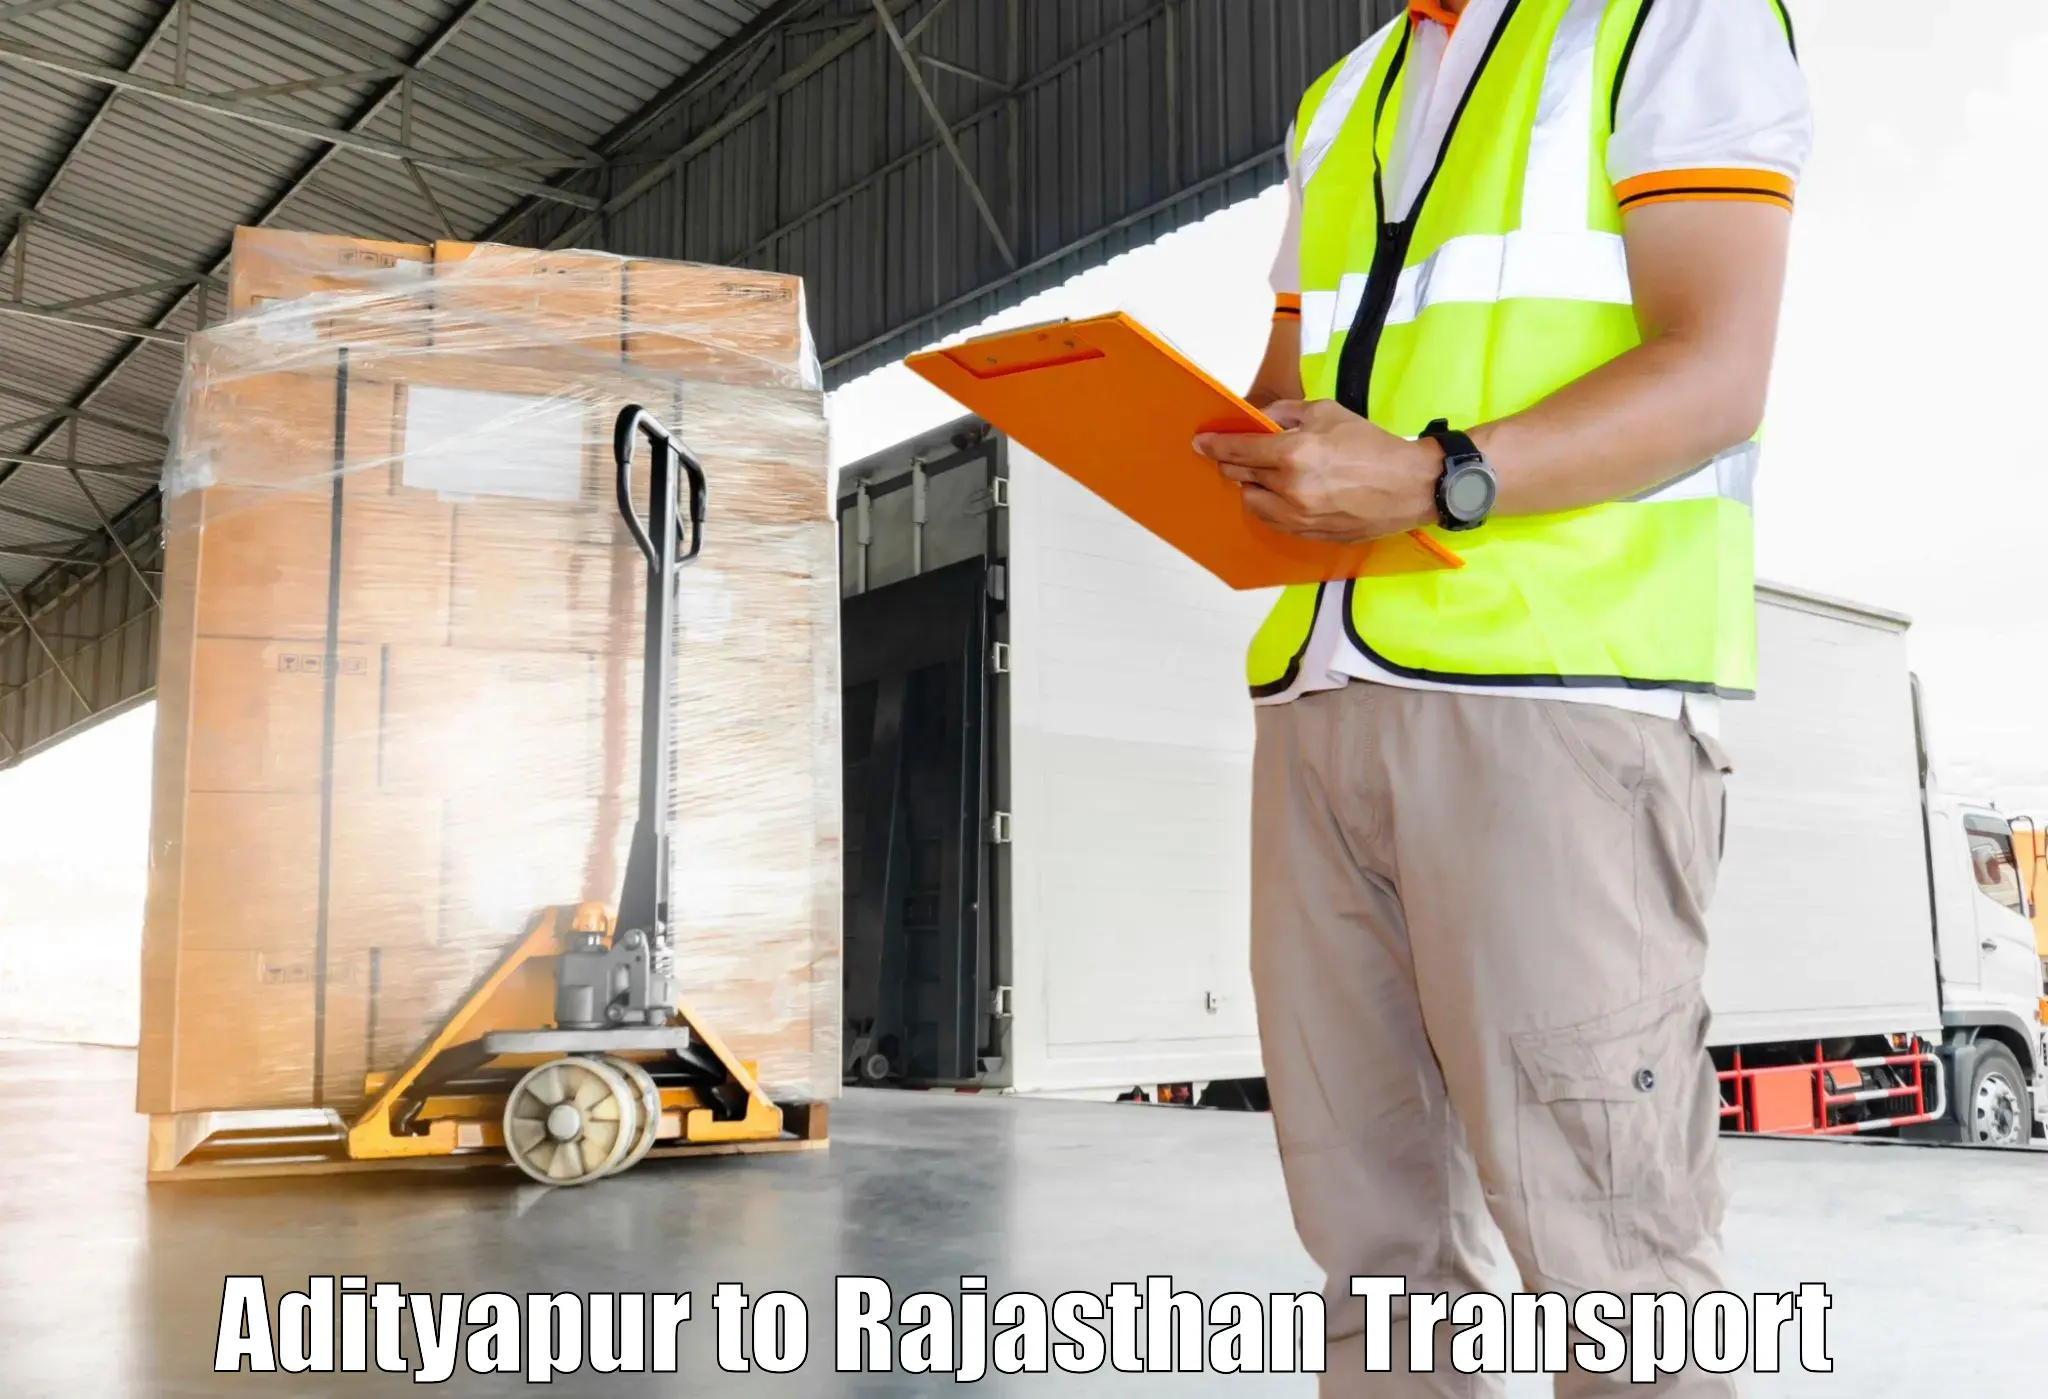 Vehicle transport services Adityapur to Jodhpur